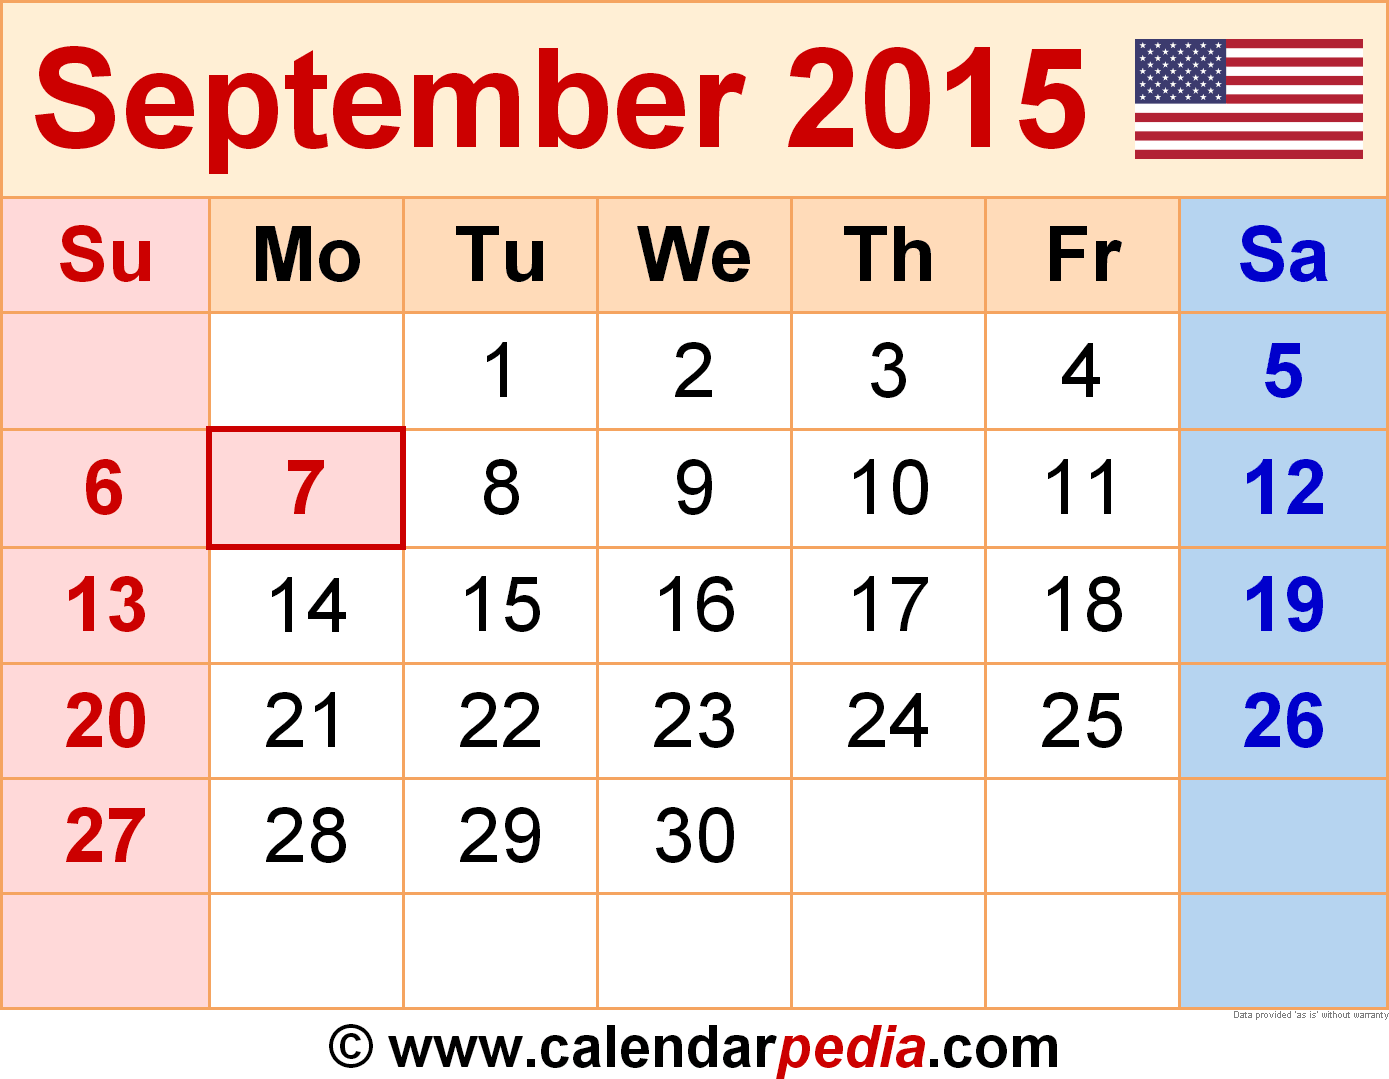 September 2015 calendar